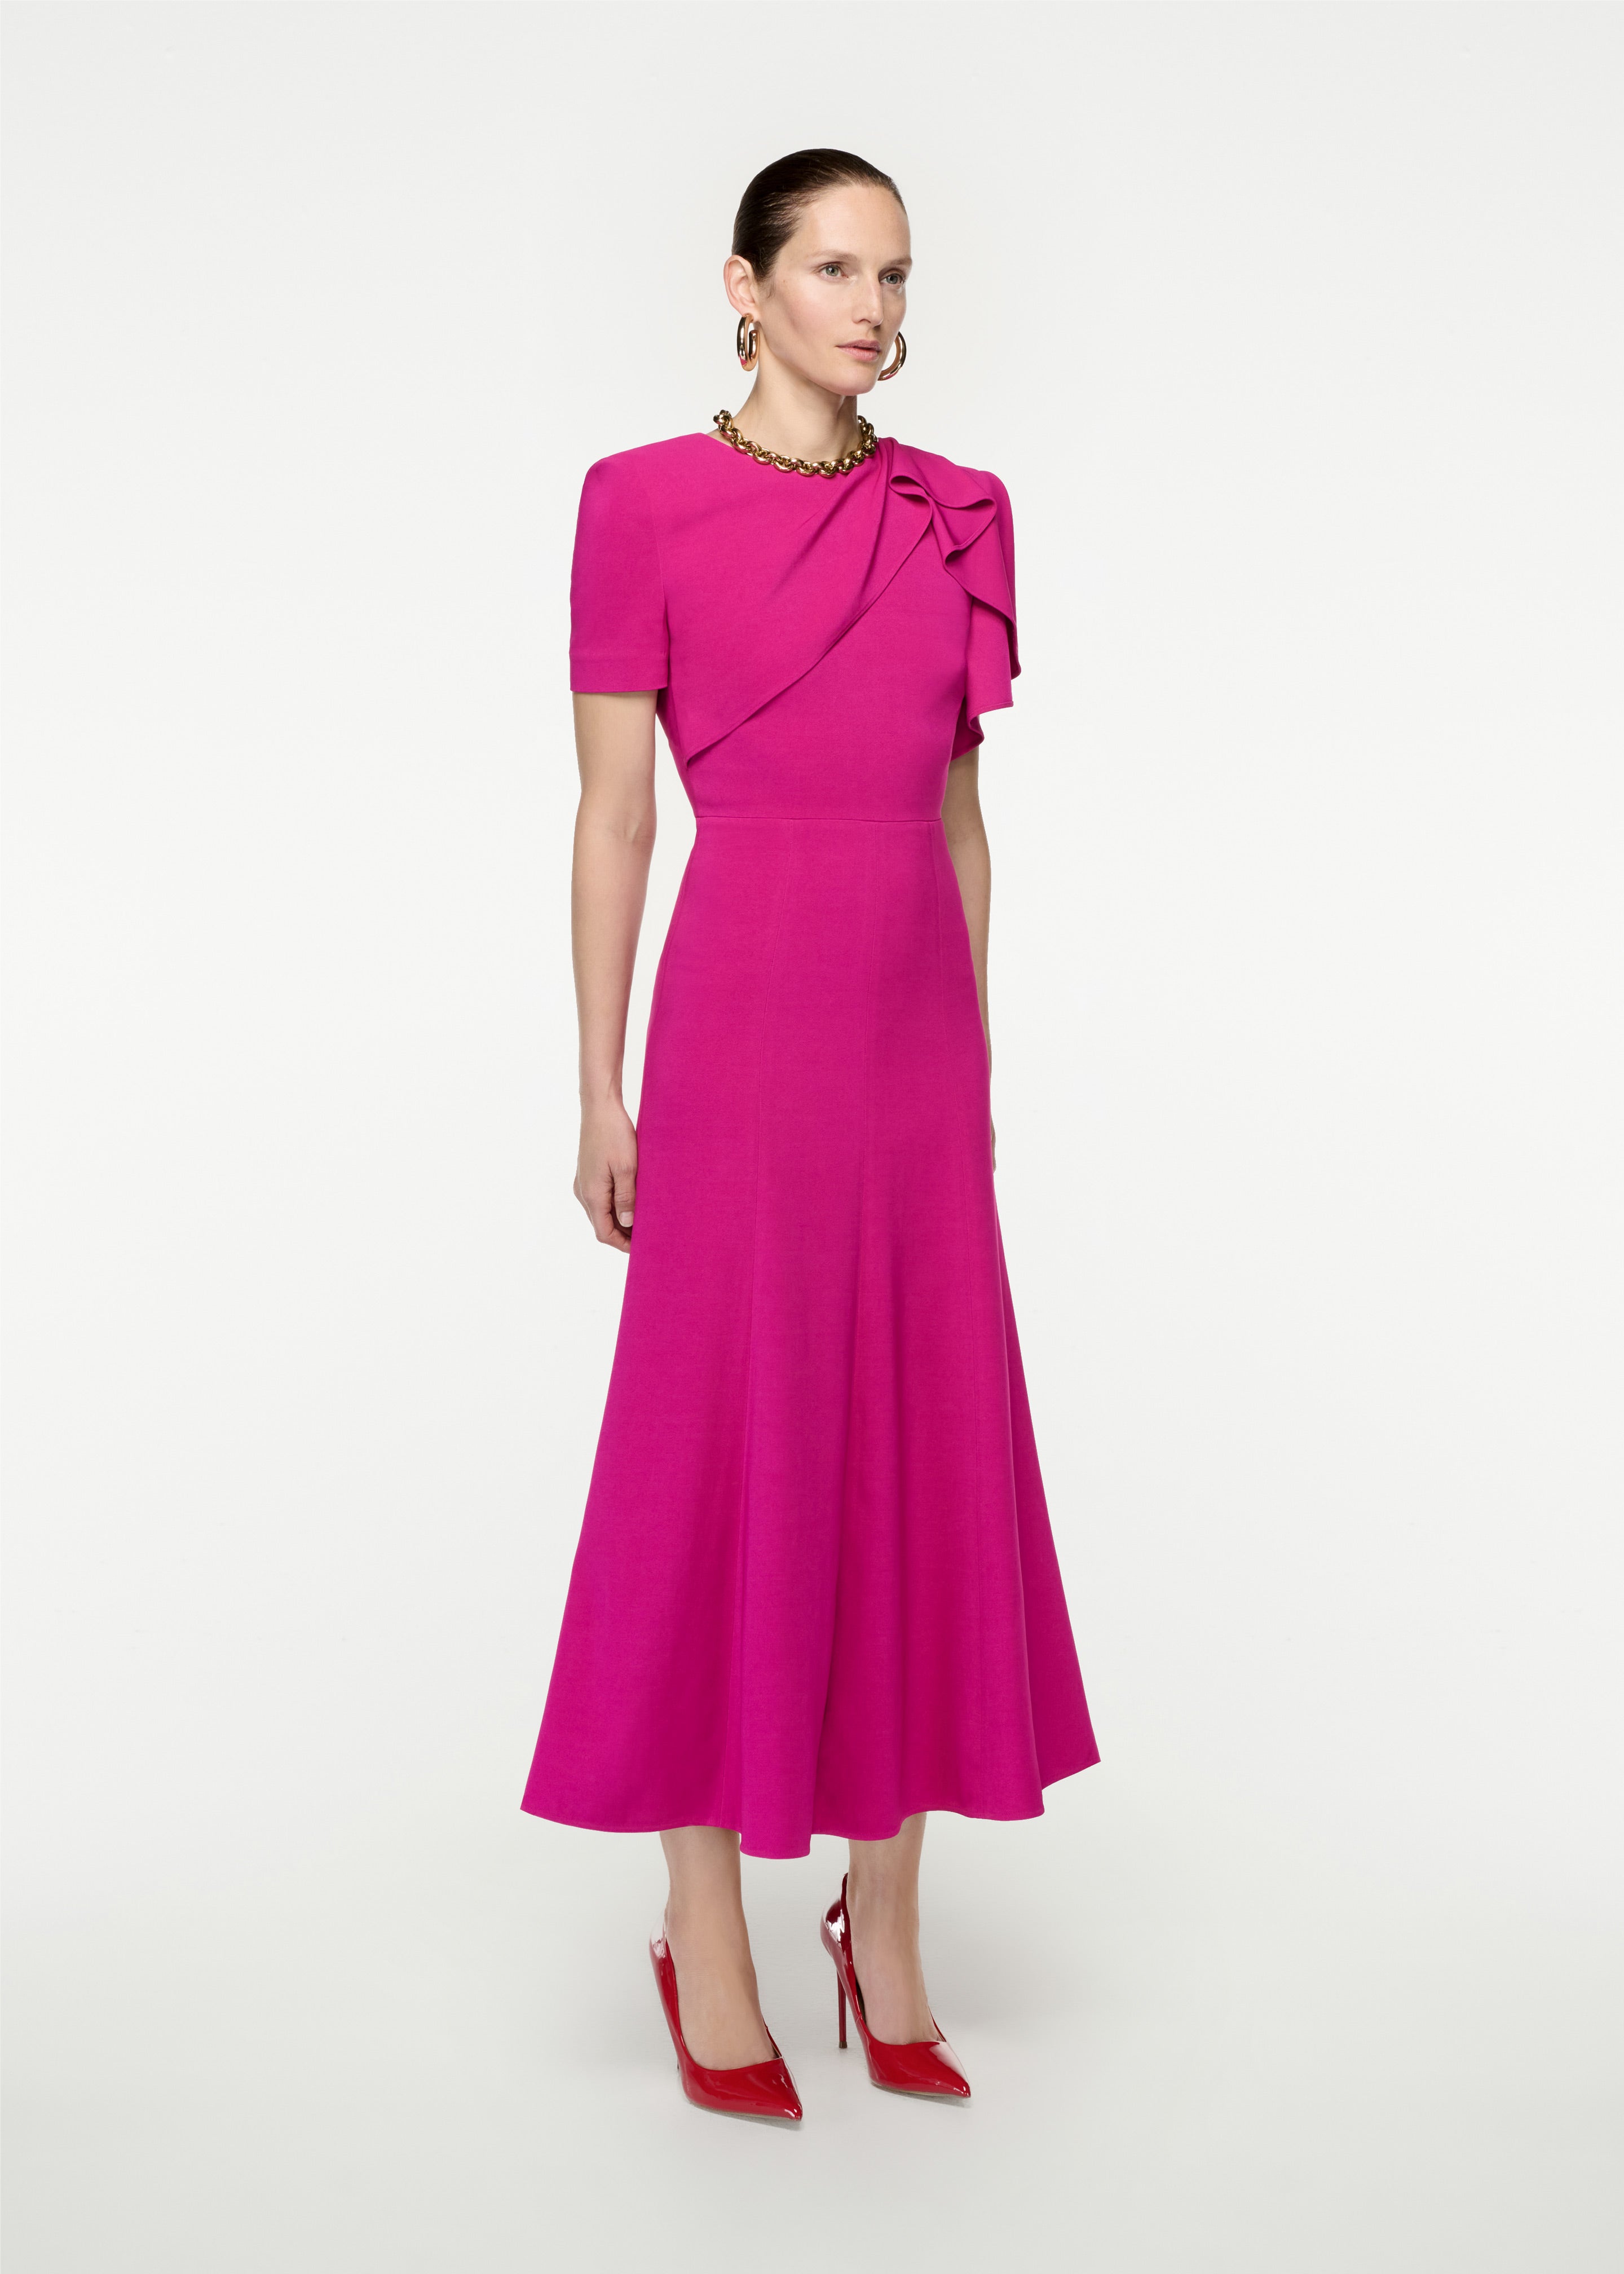 Buy MEROKEETY Women's Flutter Short Sleeve Smocked Midi Dress Summer Casual  Tiered A-Line Dress, Beige, Medium at Amazon.in